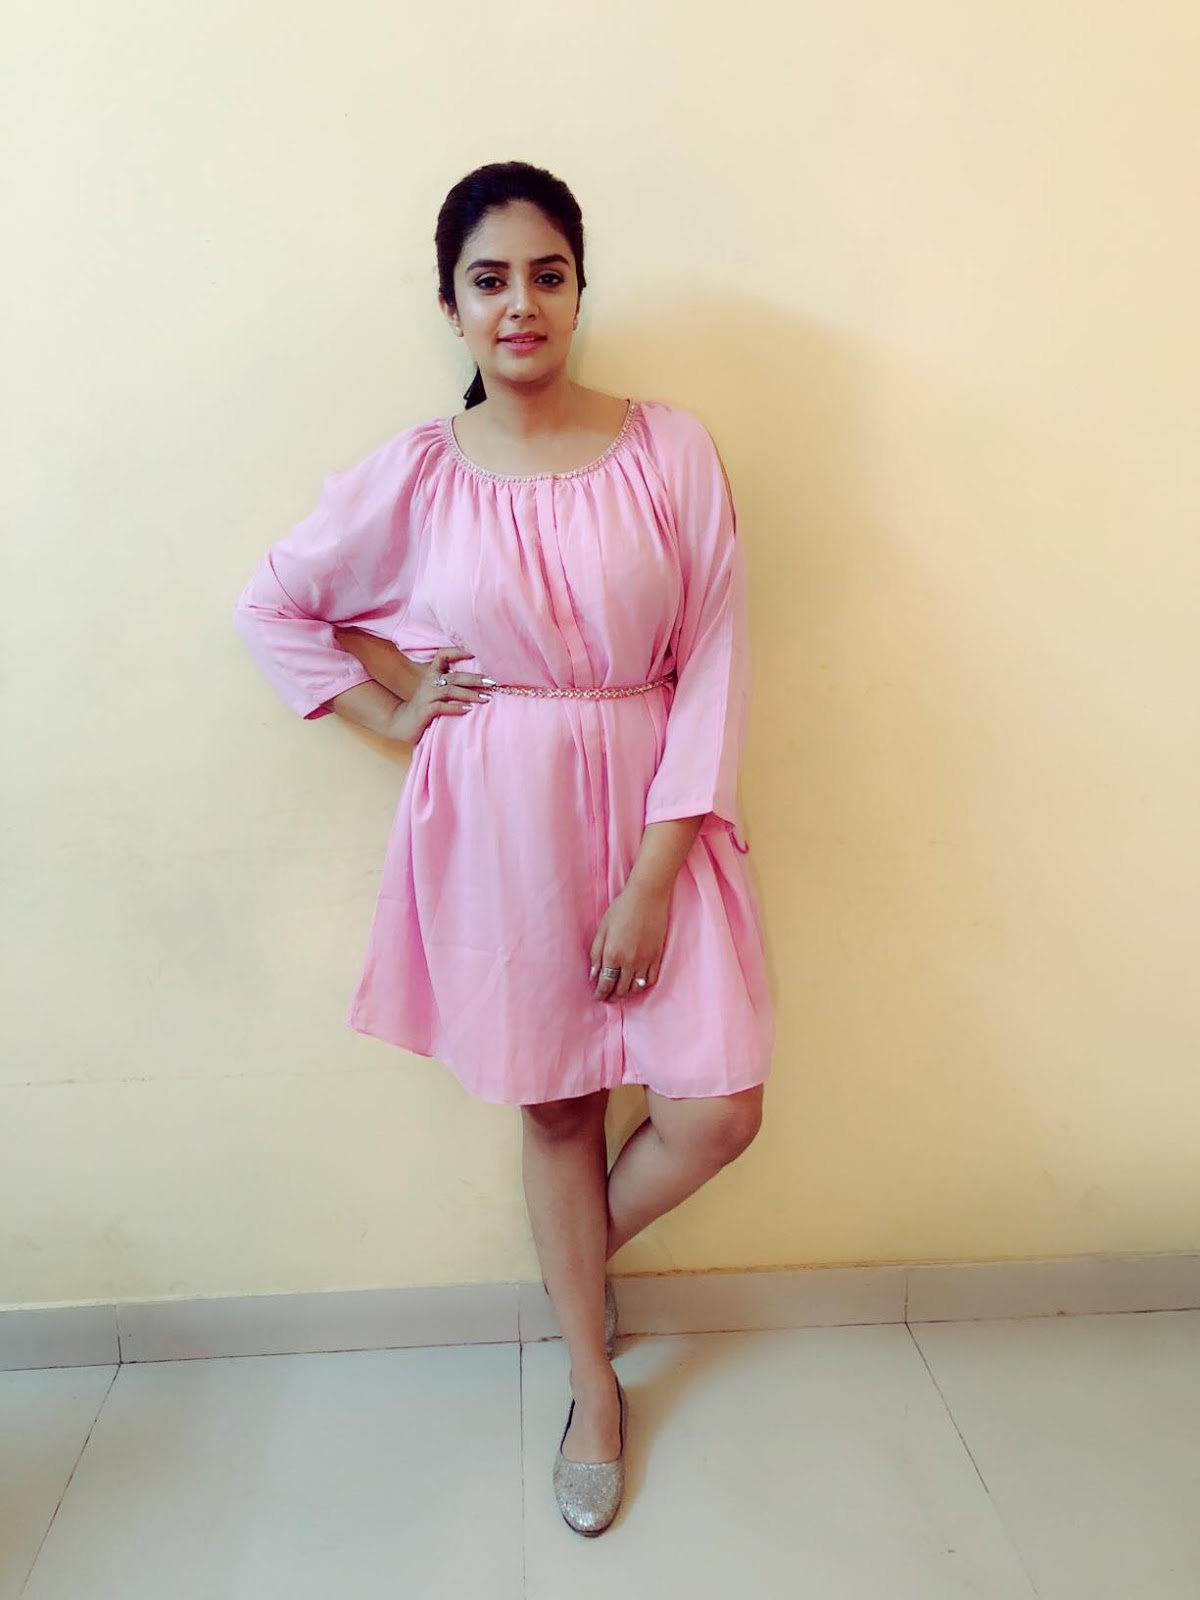 Indian TV Anchor Sreemukhi Long Legs Photos In Pink Dress